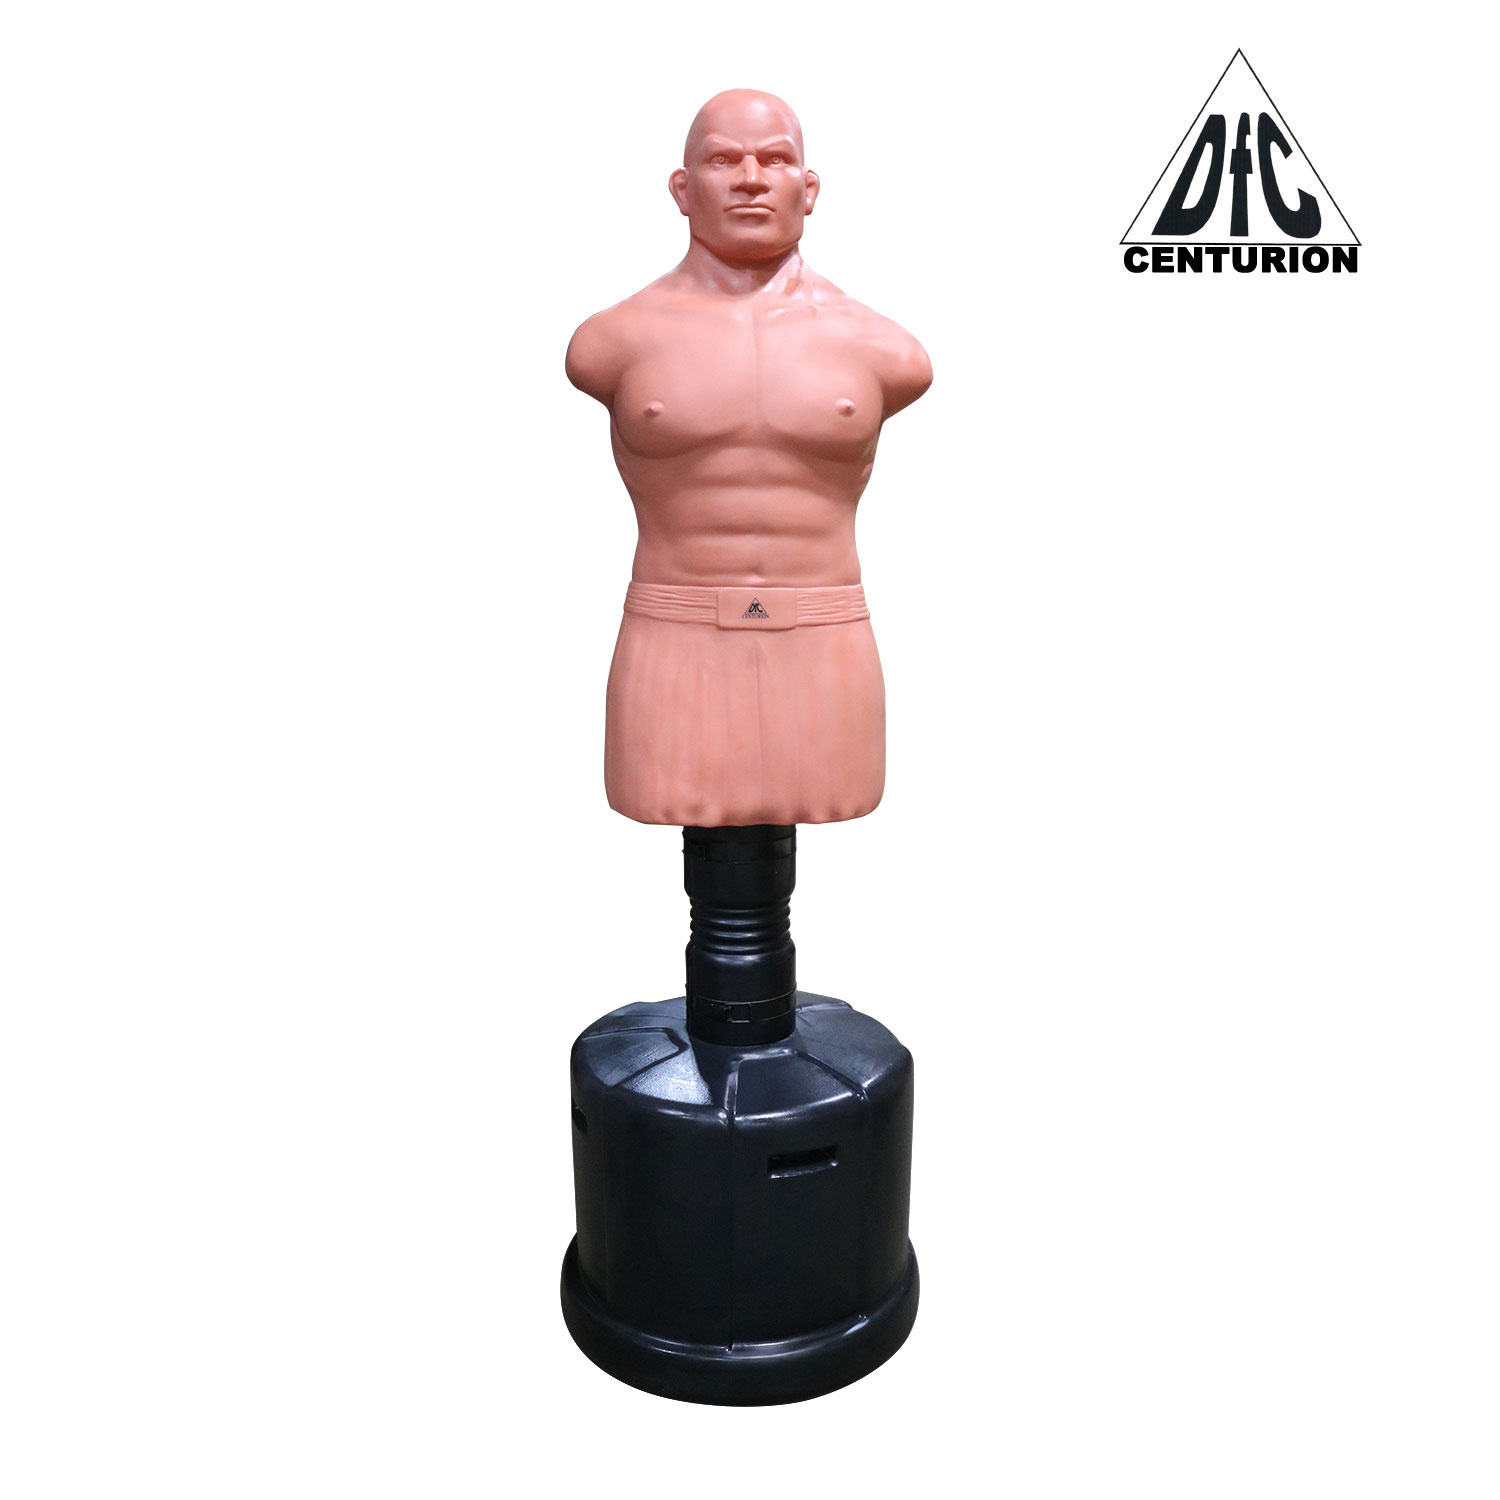 Centurion Boxing Punching Man-Heavy водоналивной - бежевый в Уфе по цене 45990 ₽ в категории боксерские мешки и груши DFC